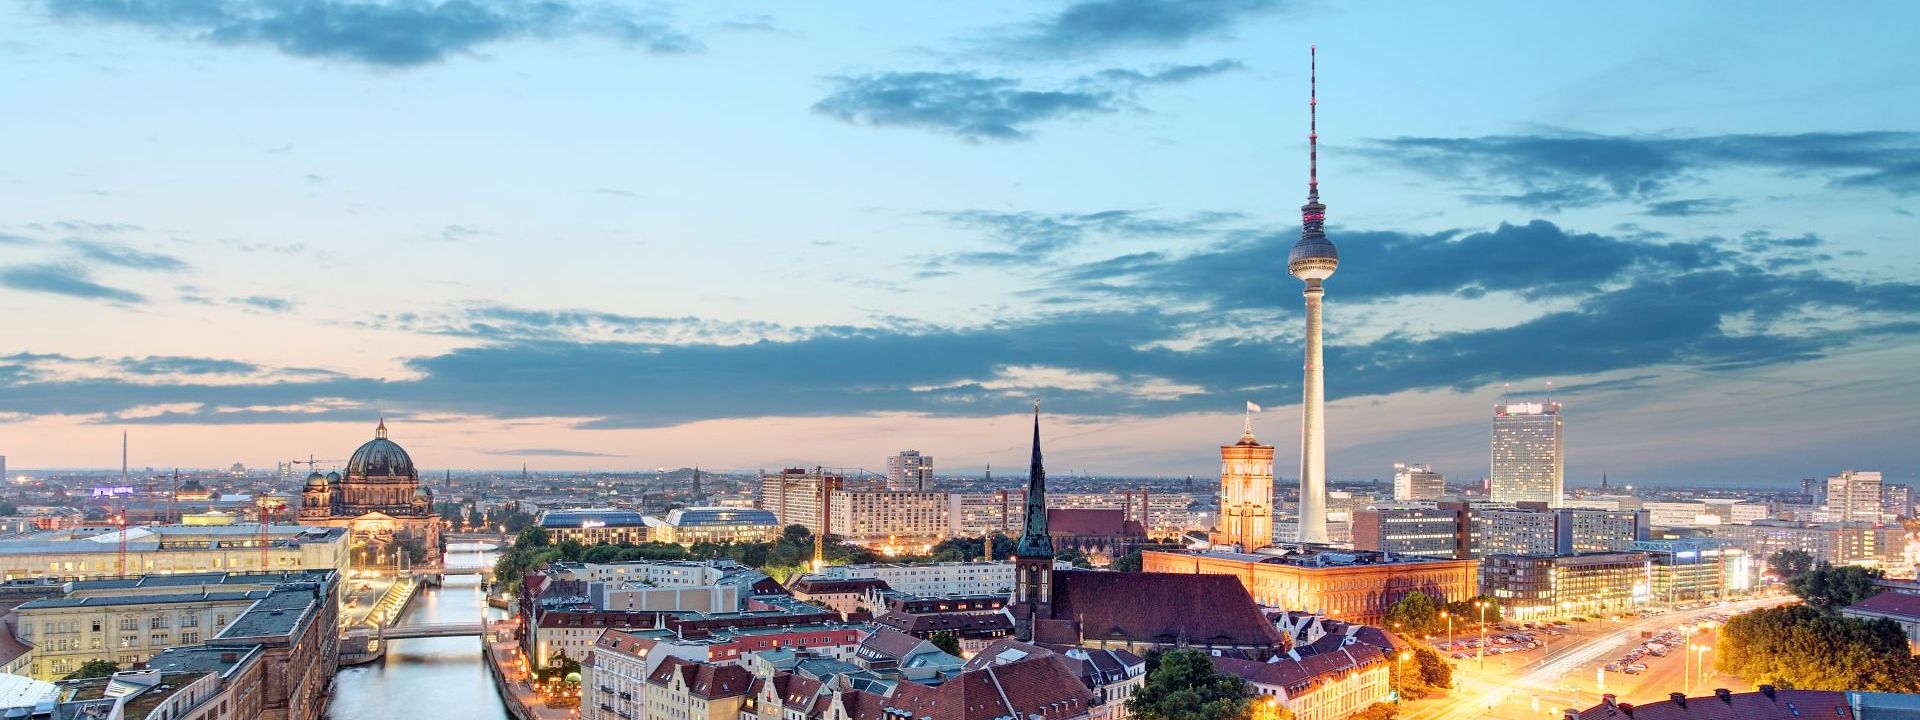 Blick auf Berlin inklusive Fernsehturm